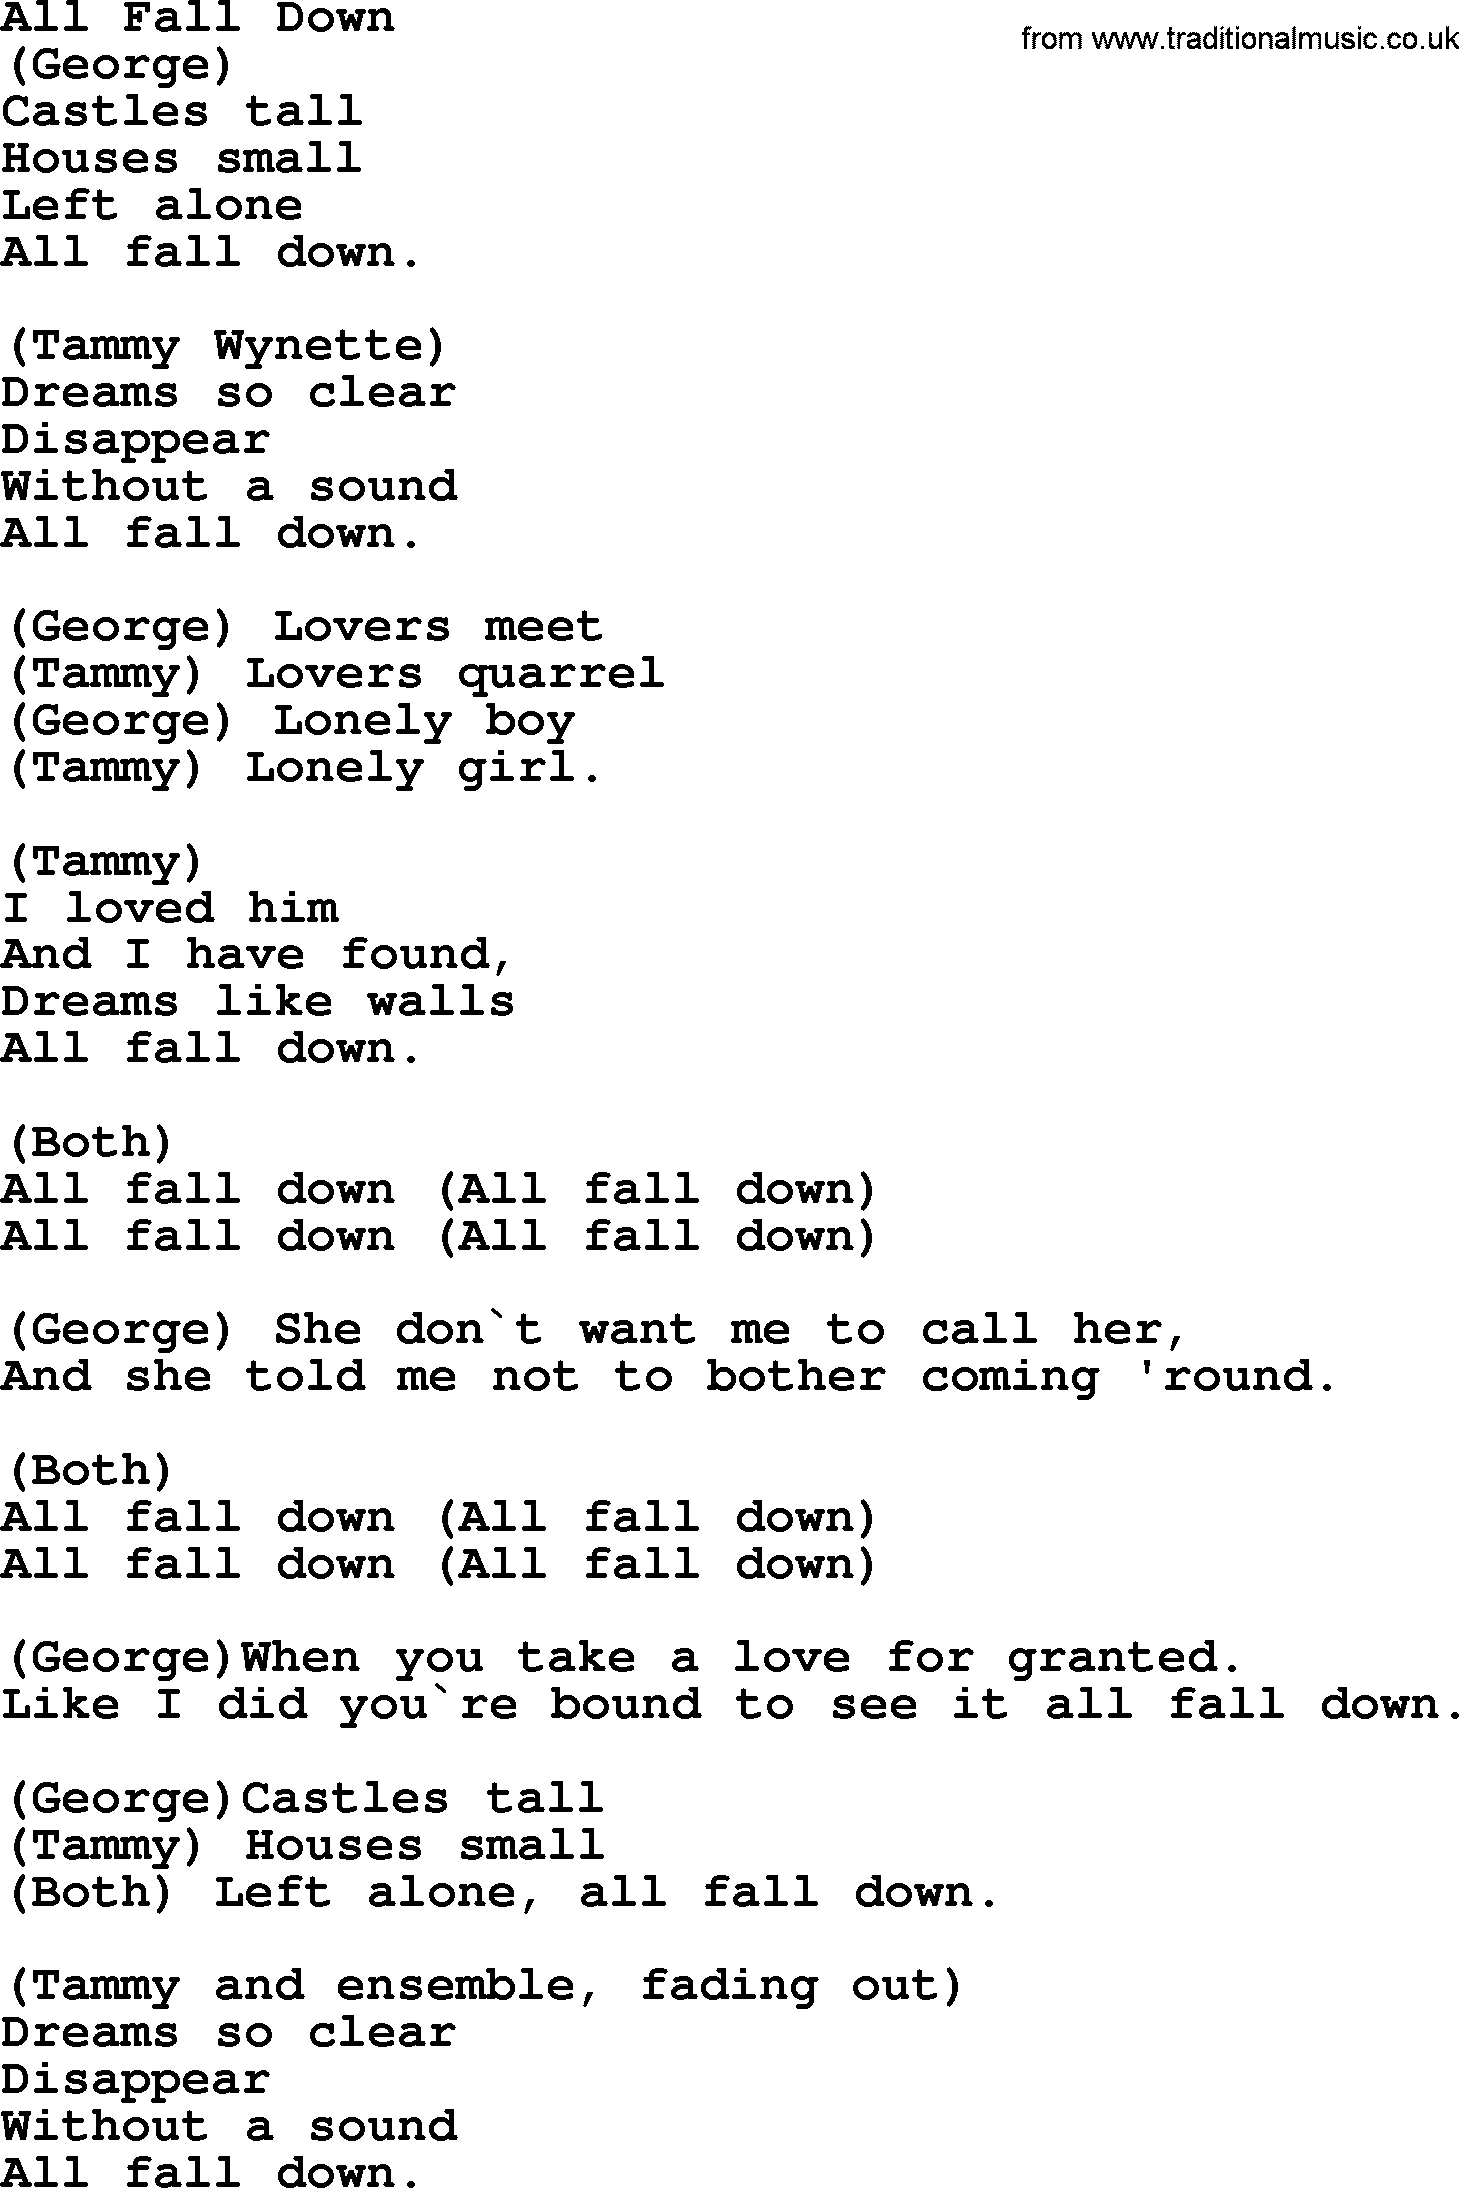 George Jones song: All Fall Down, lyrics